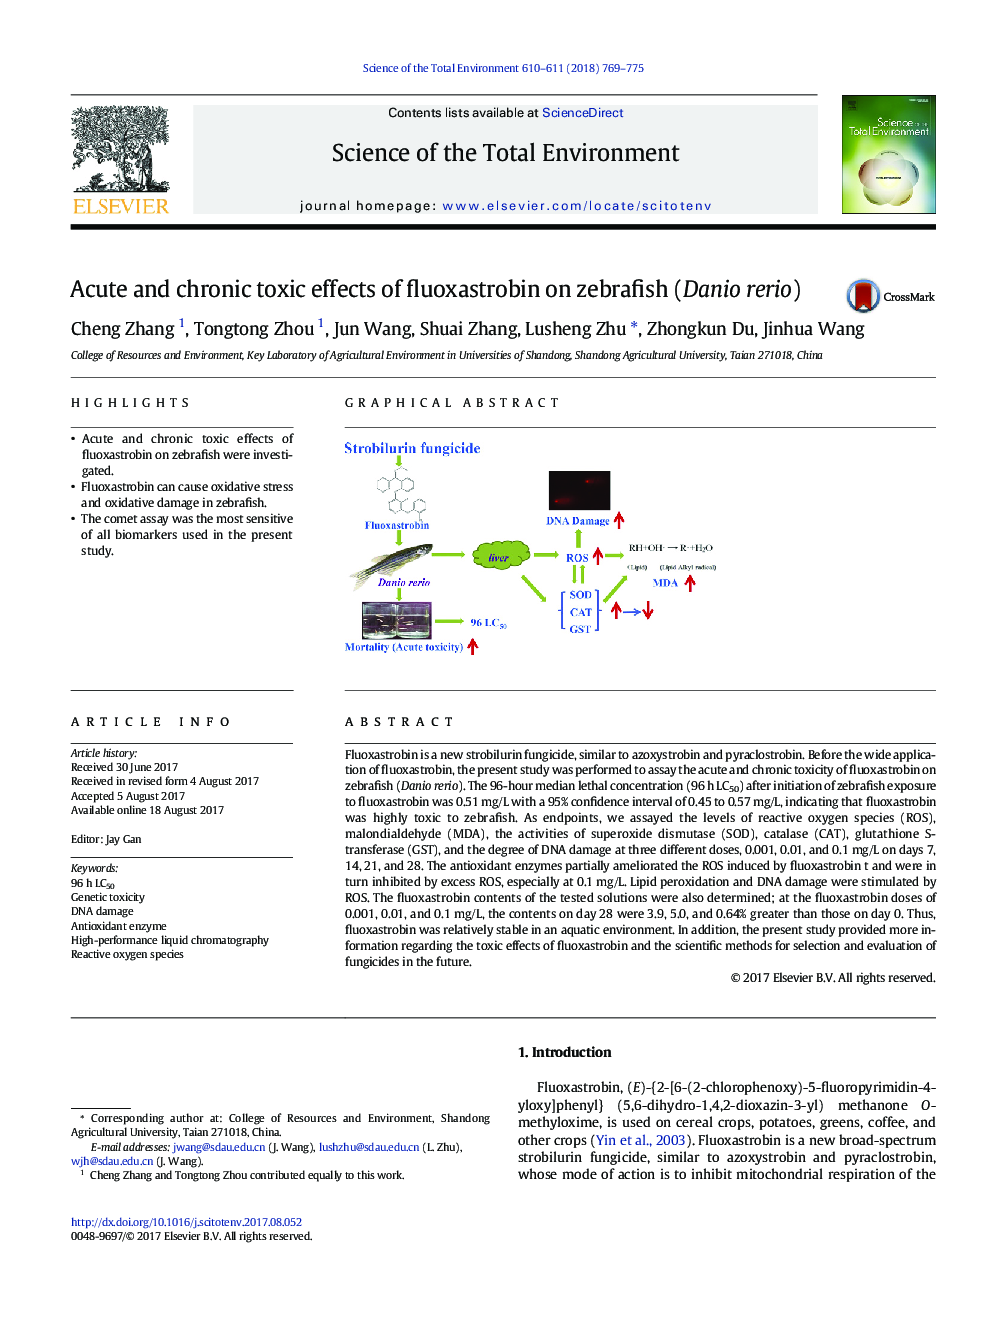 Acute and chronic toxic effects of fluoxastrobin on zebrafish (Danio rerio)